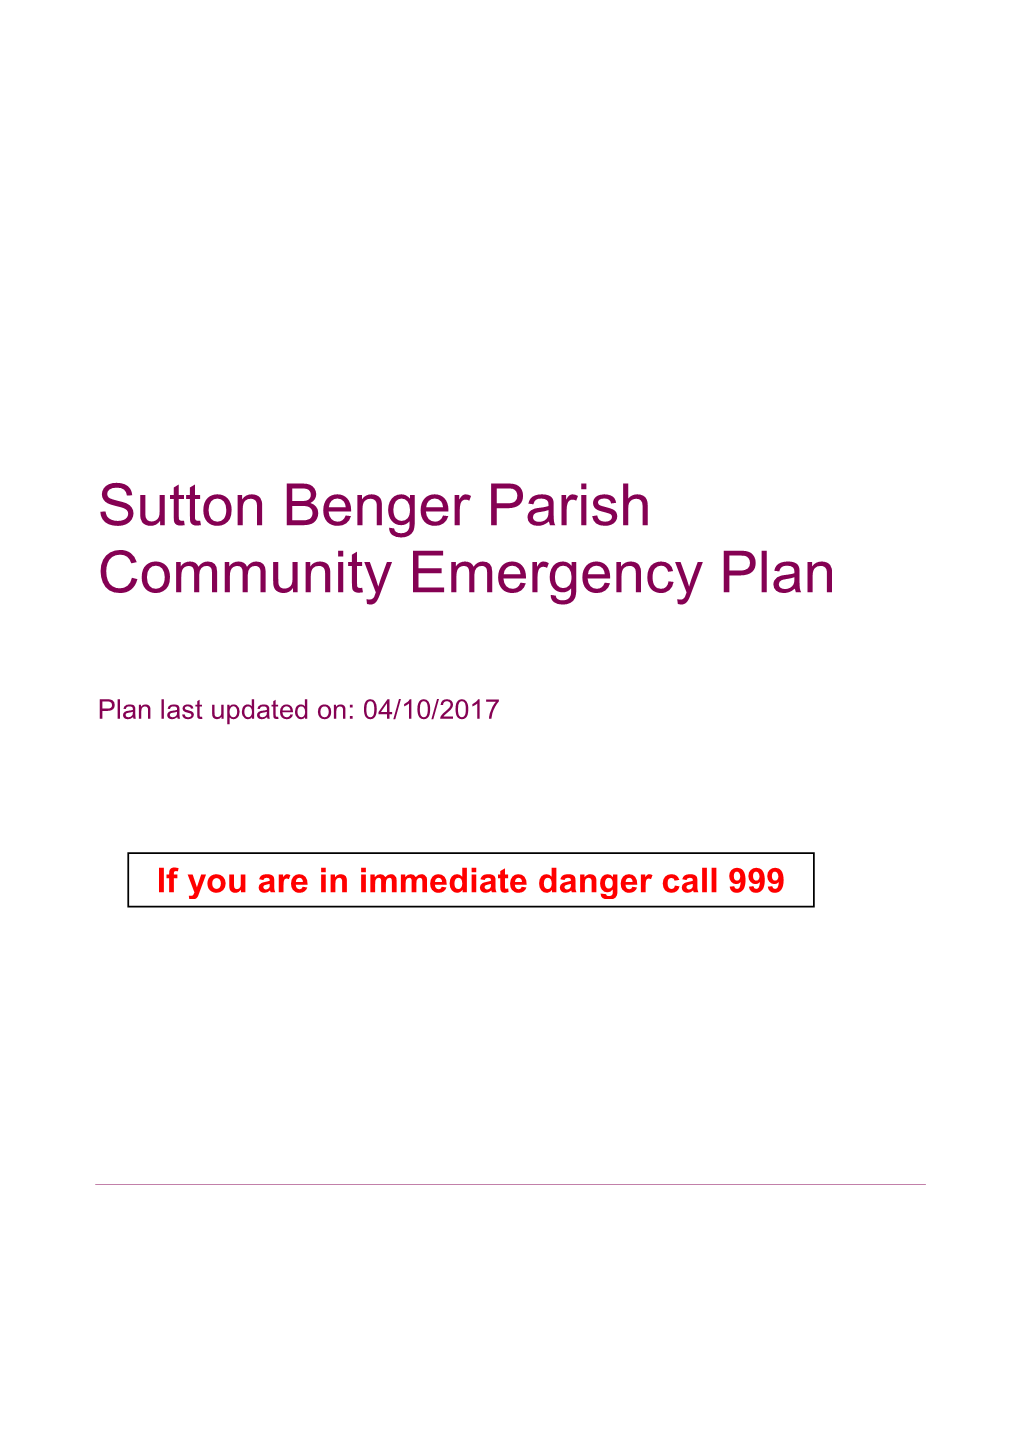 Community Emergency Plan